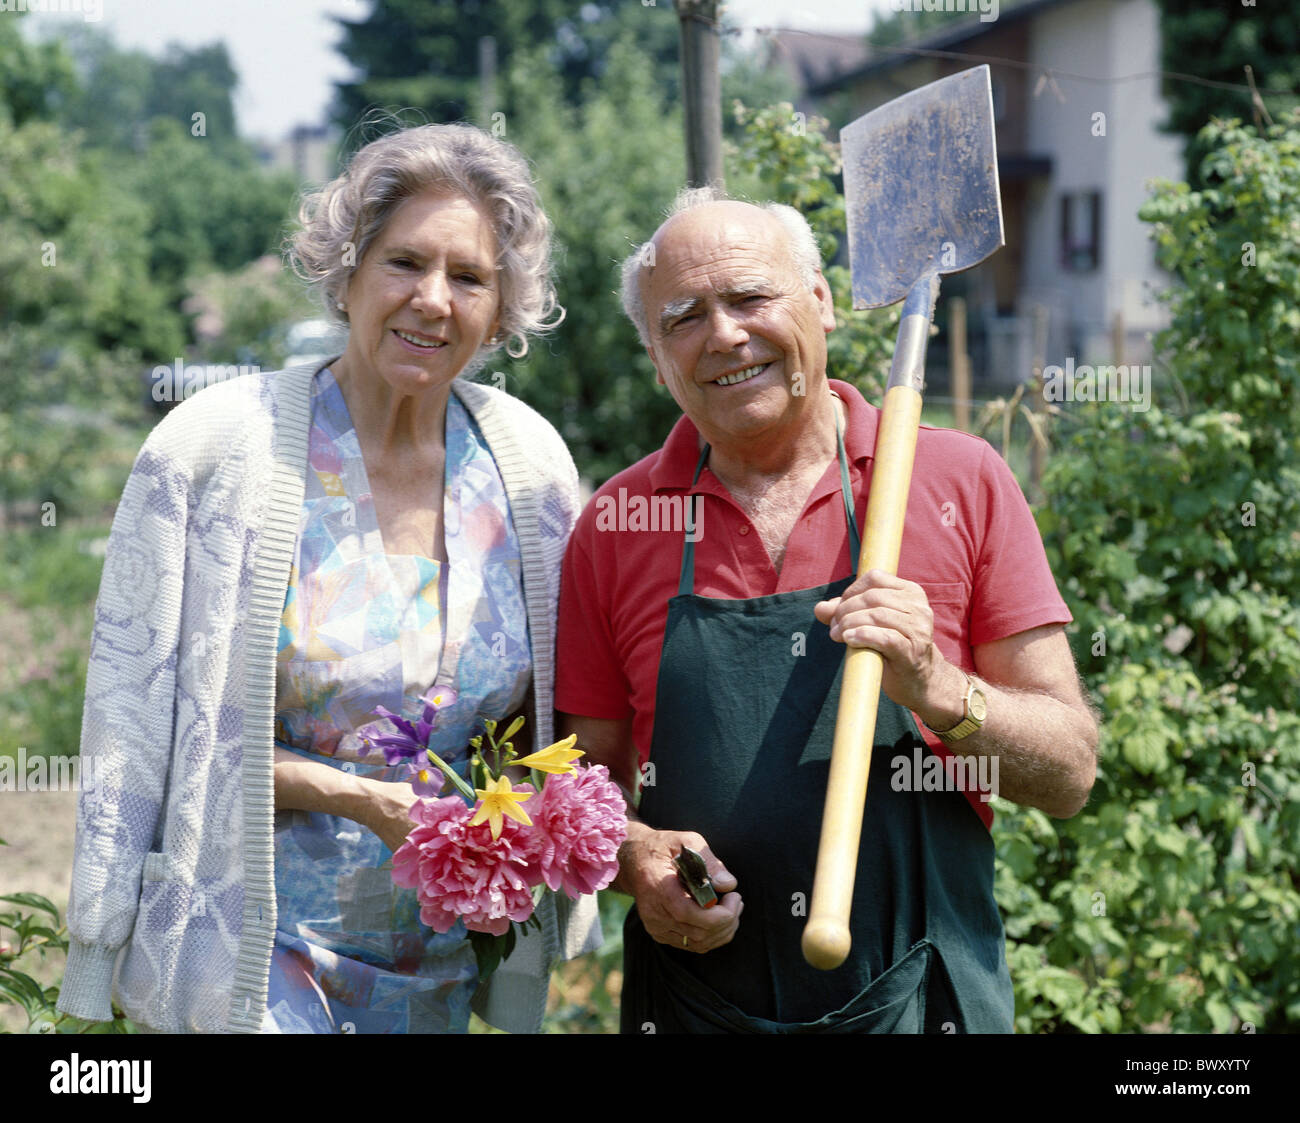 Arbeitskleidung, Blumen Garten Hobbygärtner paar paar Senioren Spavins Pik Stockfoto